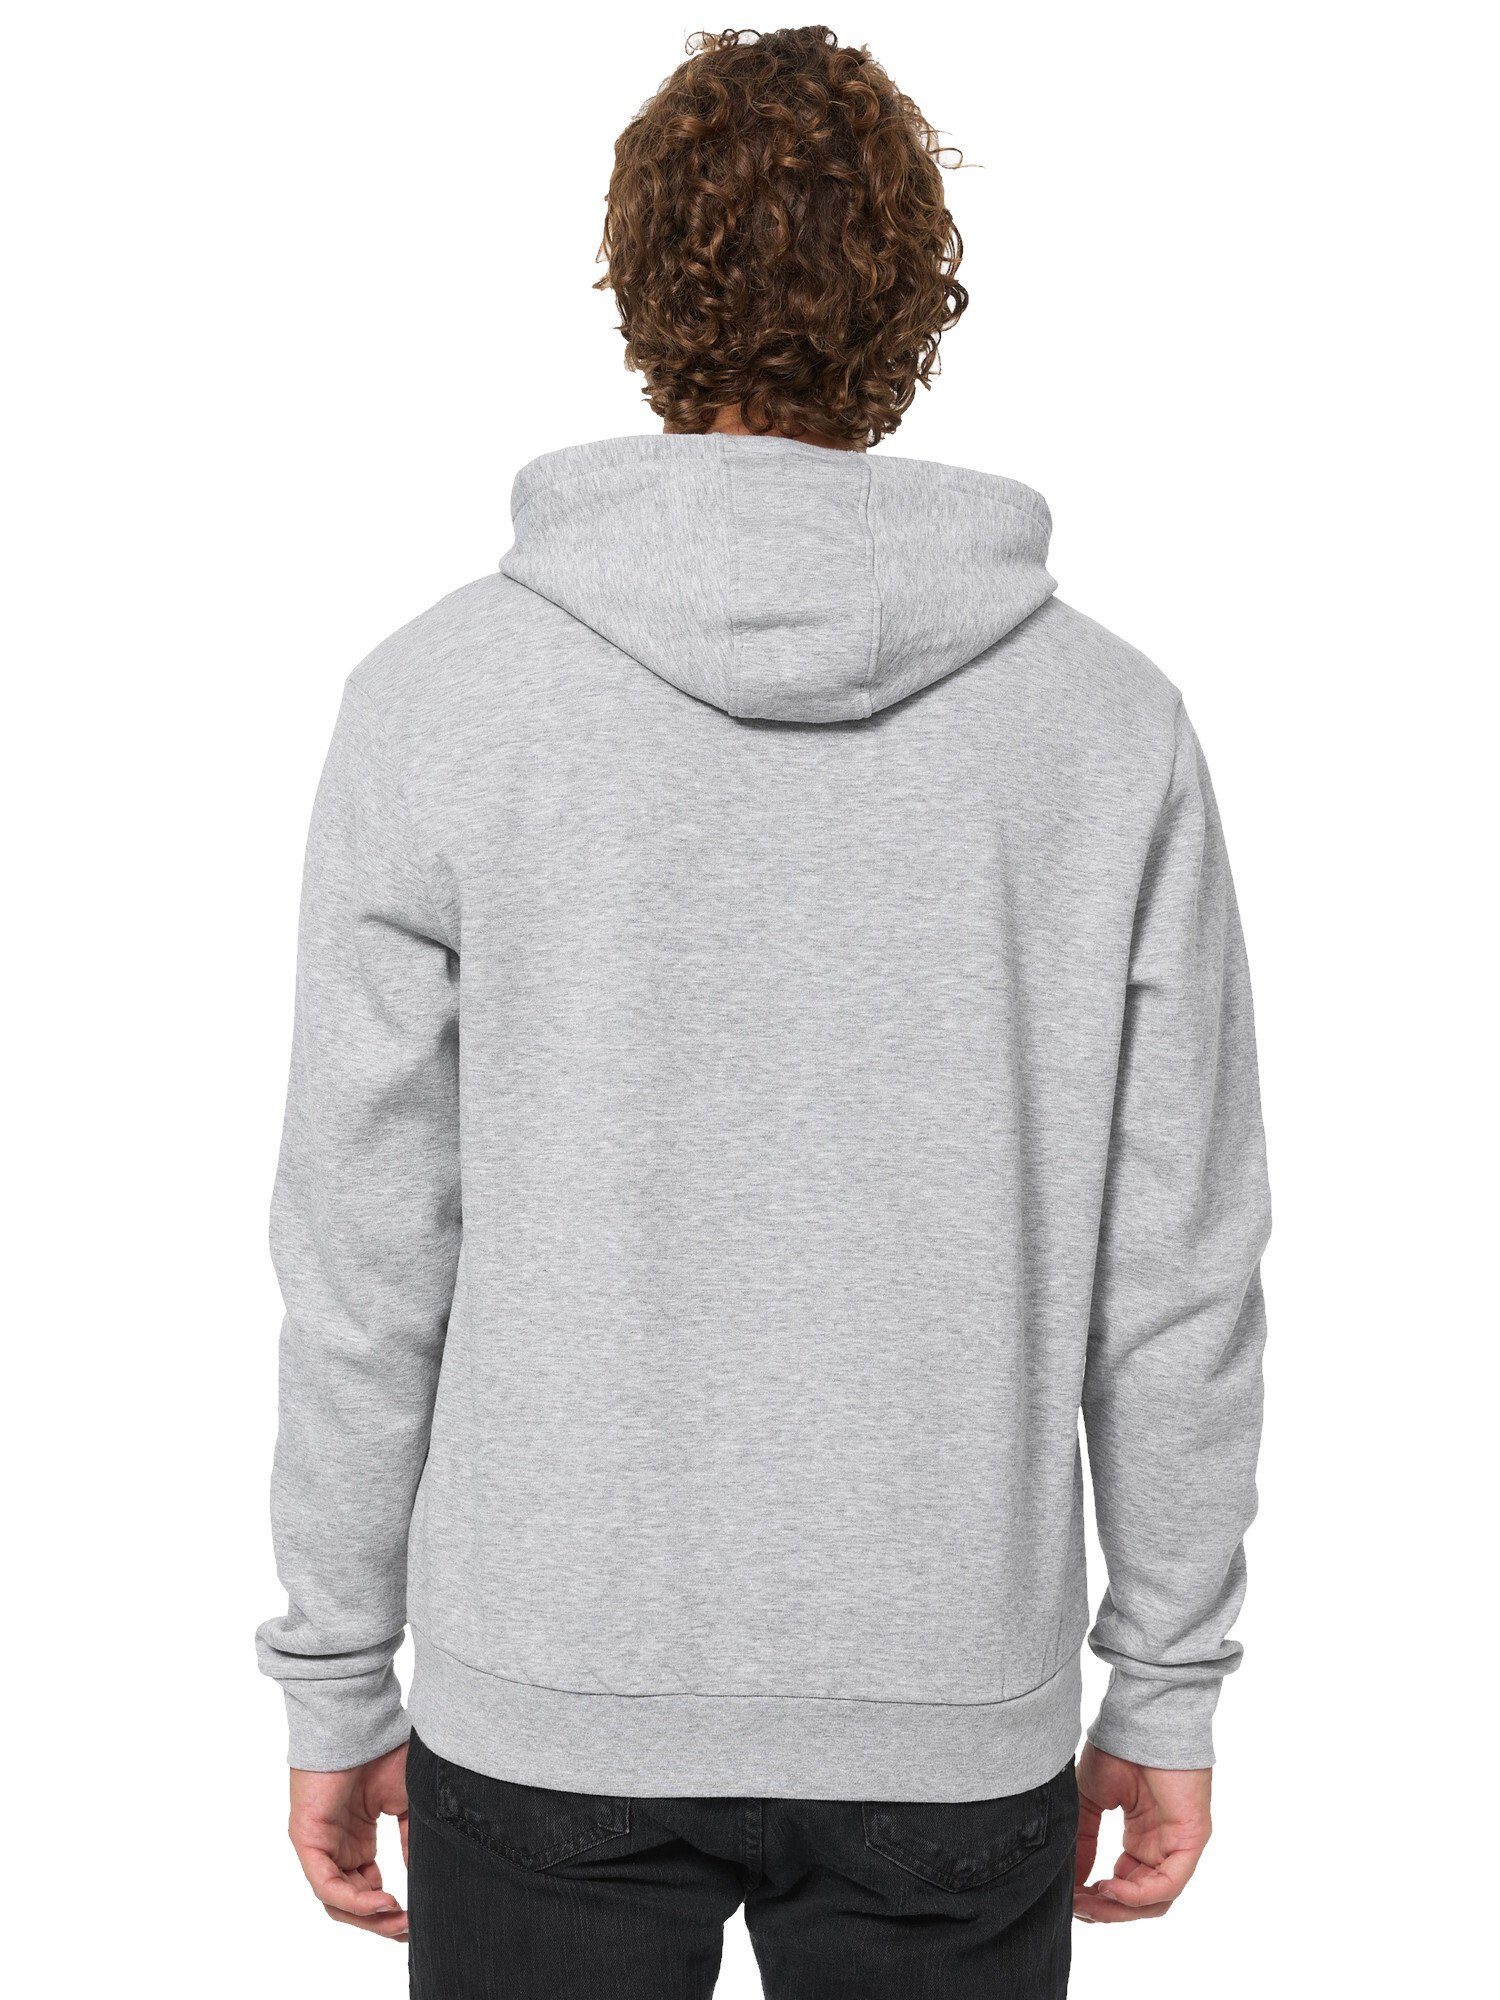 Neuestes Design Lonsdale Hoodie Kapuzenpullover Kapuzensweatshirt STOTFIELD grau mit